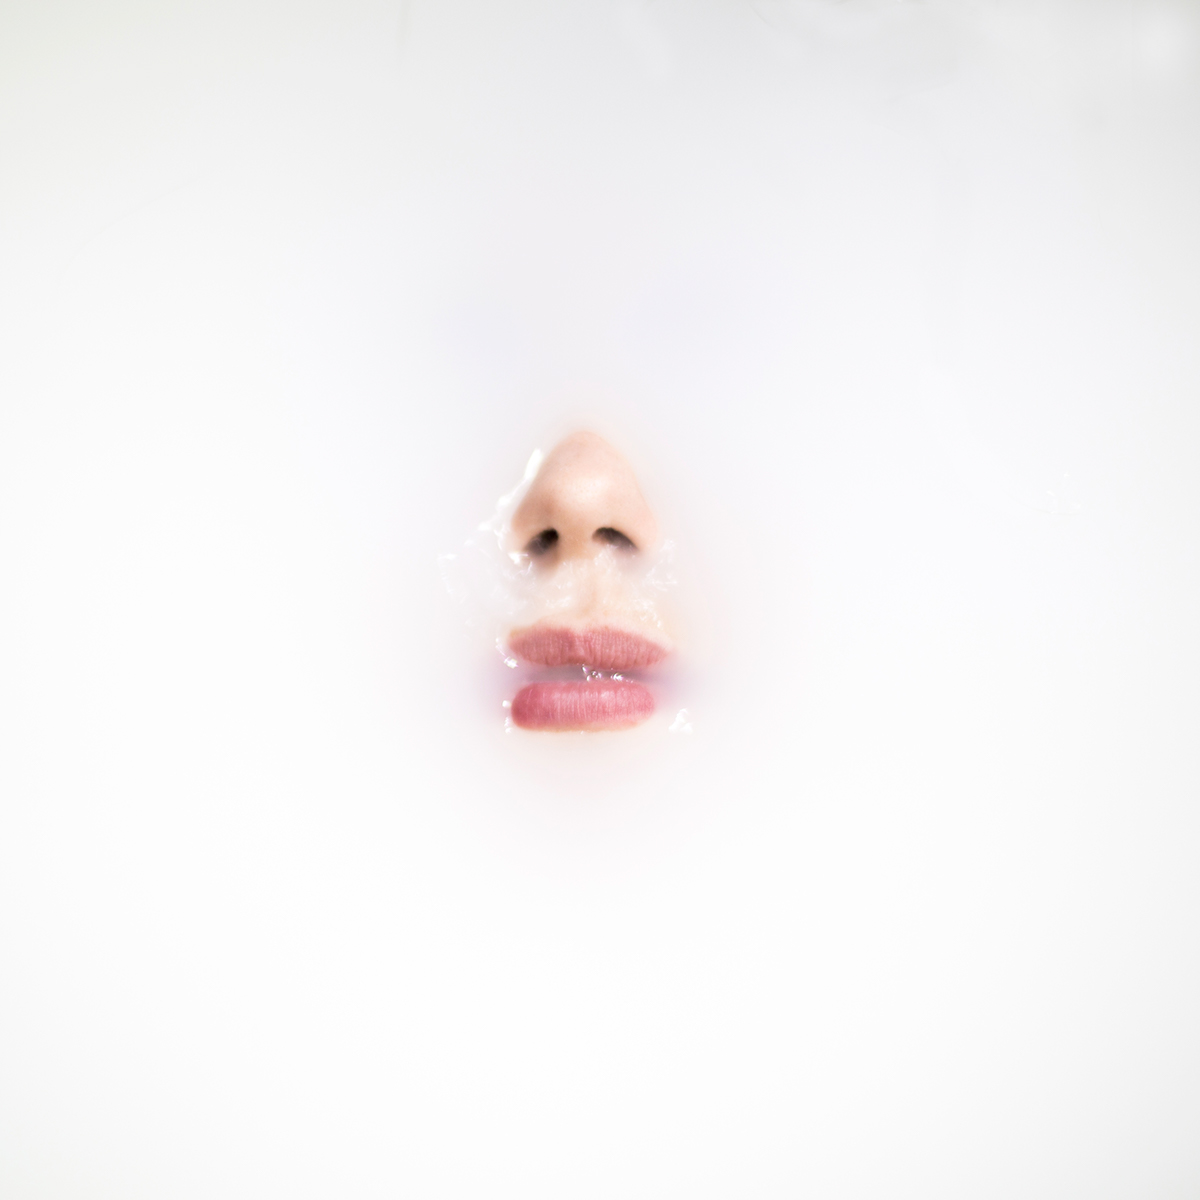 apnea girl portrait milk water nose Mouth White Photography  fine art